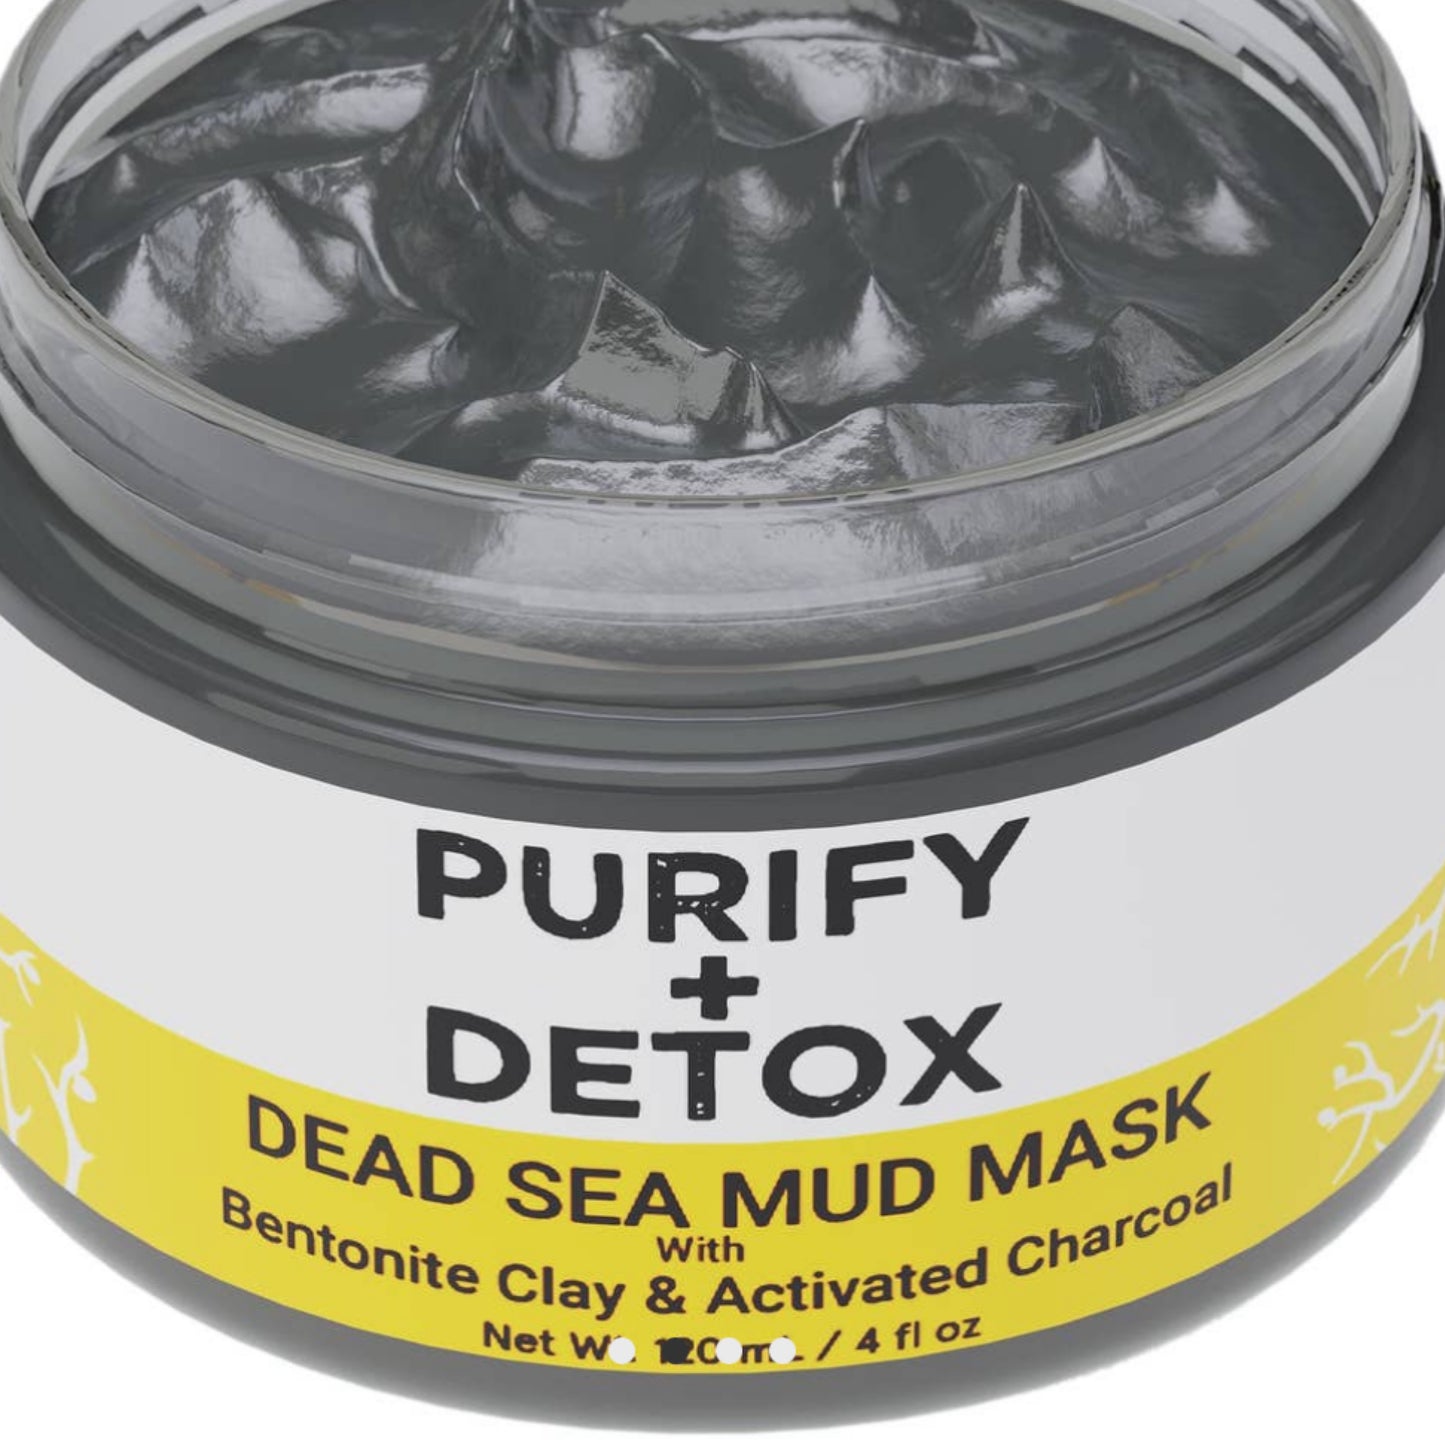 Purify & Detox - Dead Sea Mud Mask Charcoal